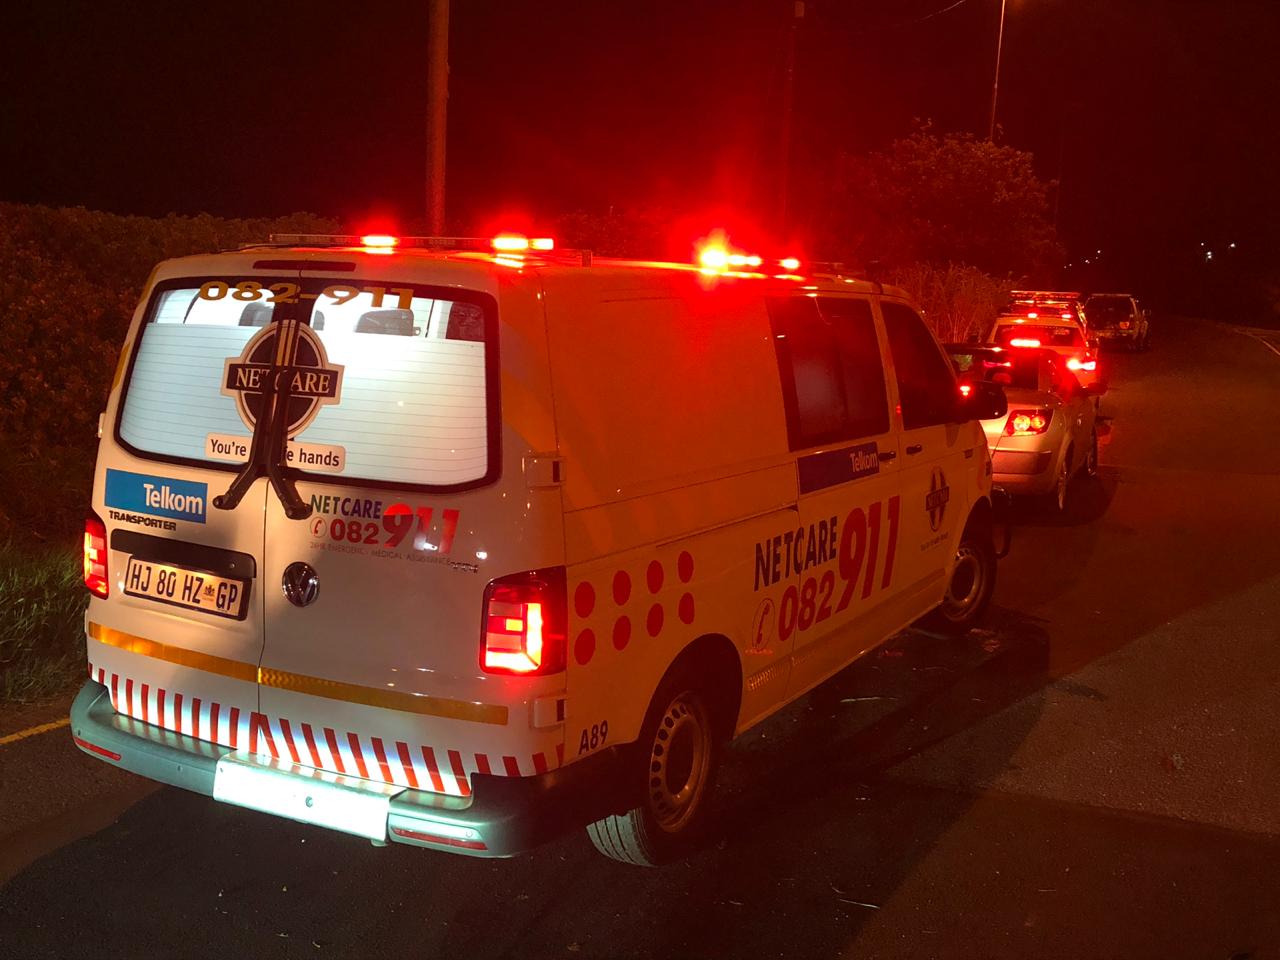 Durban man has seizures while driving on Freeway